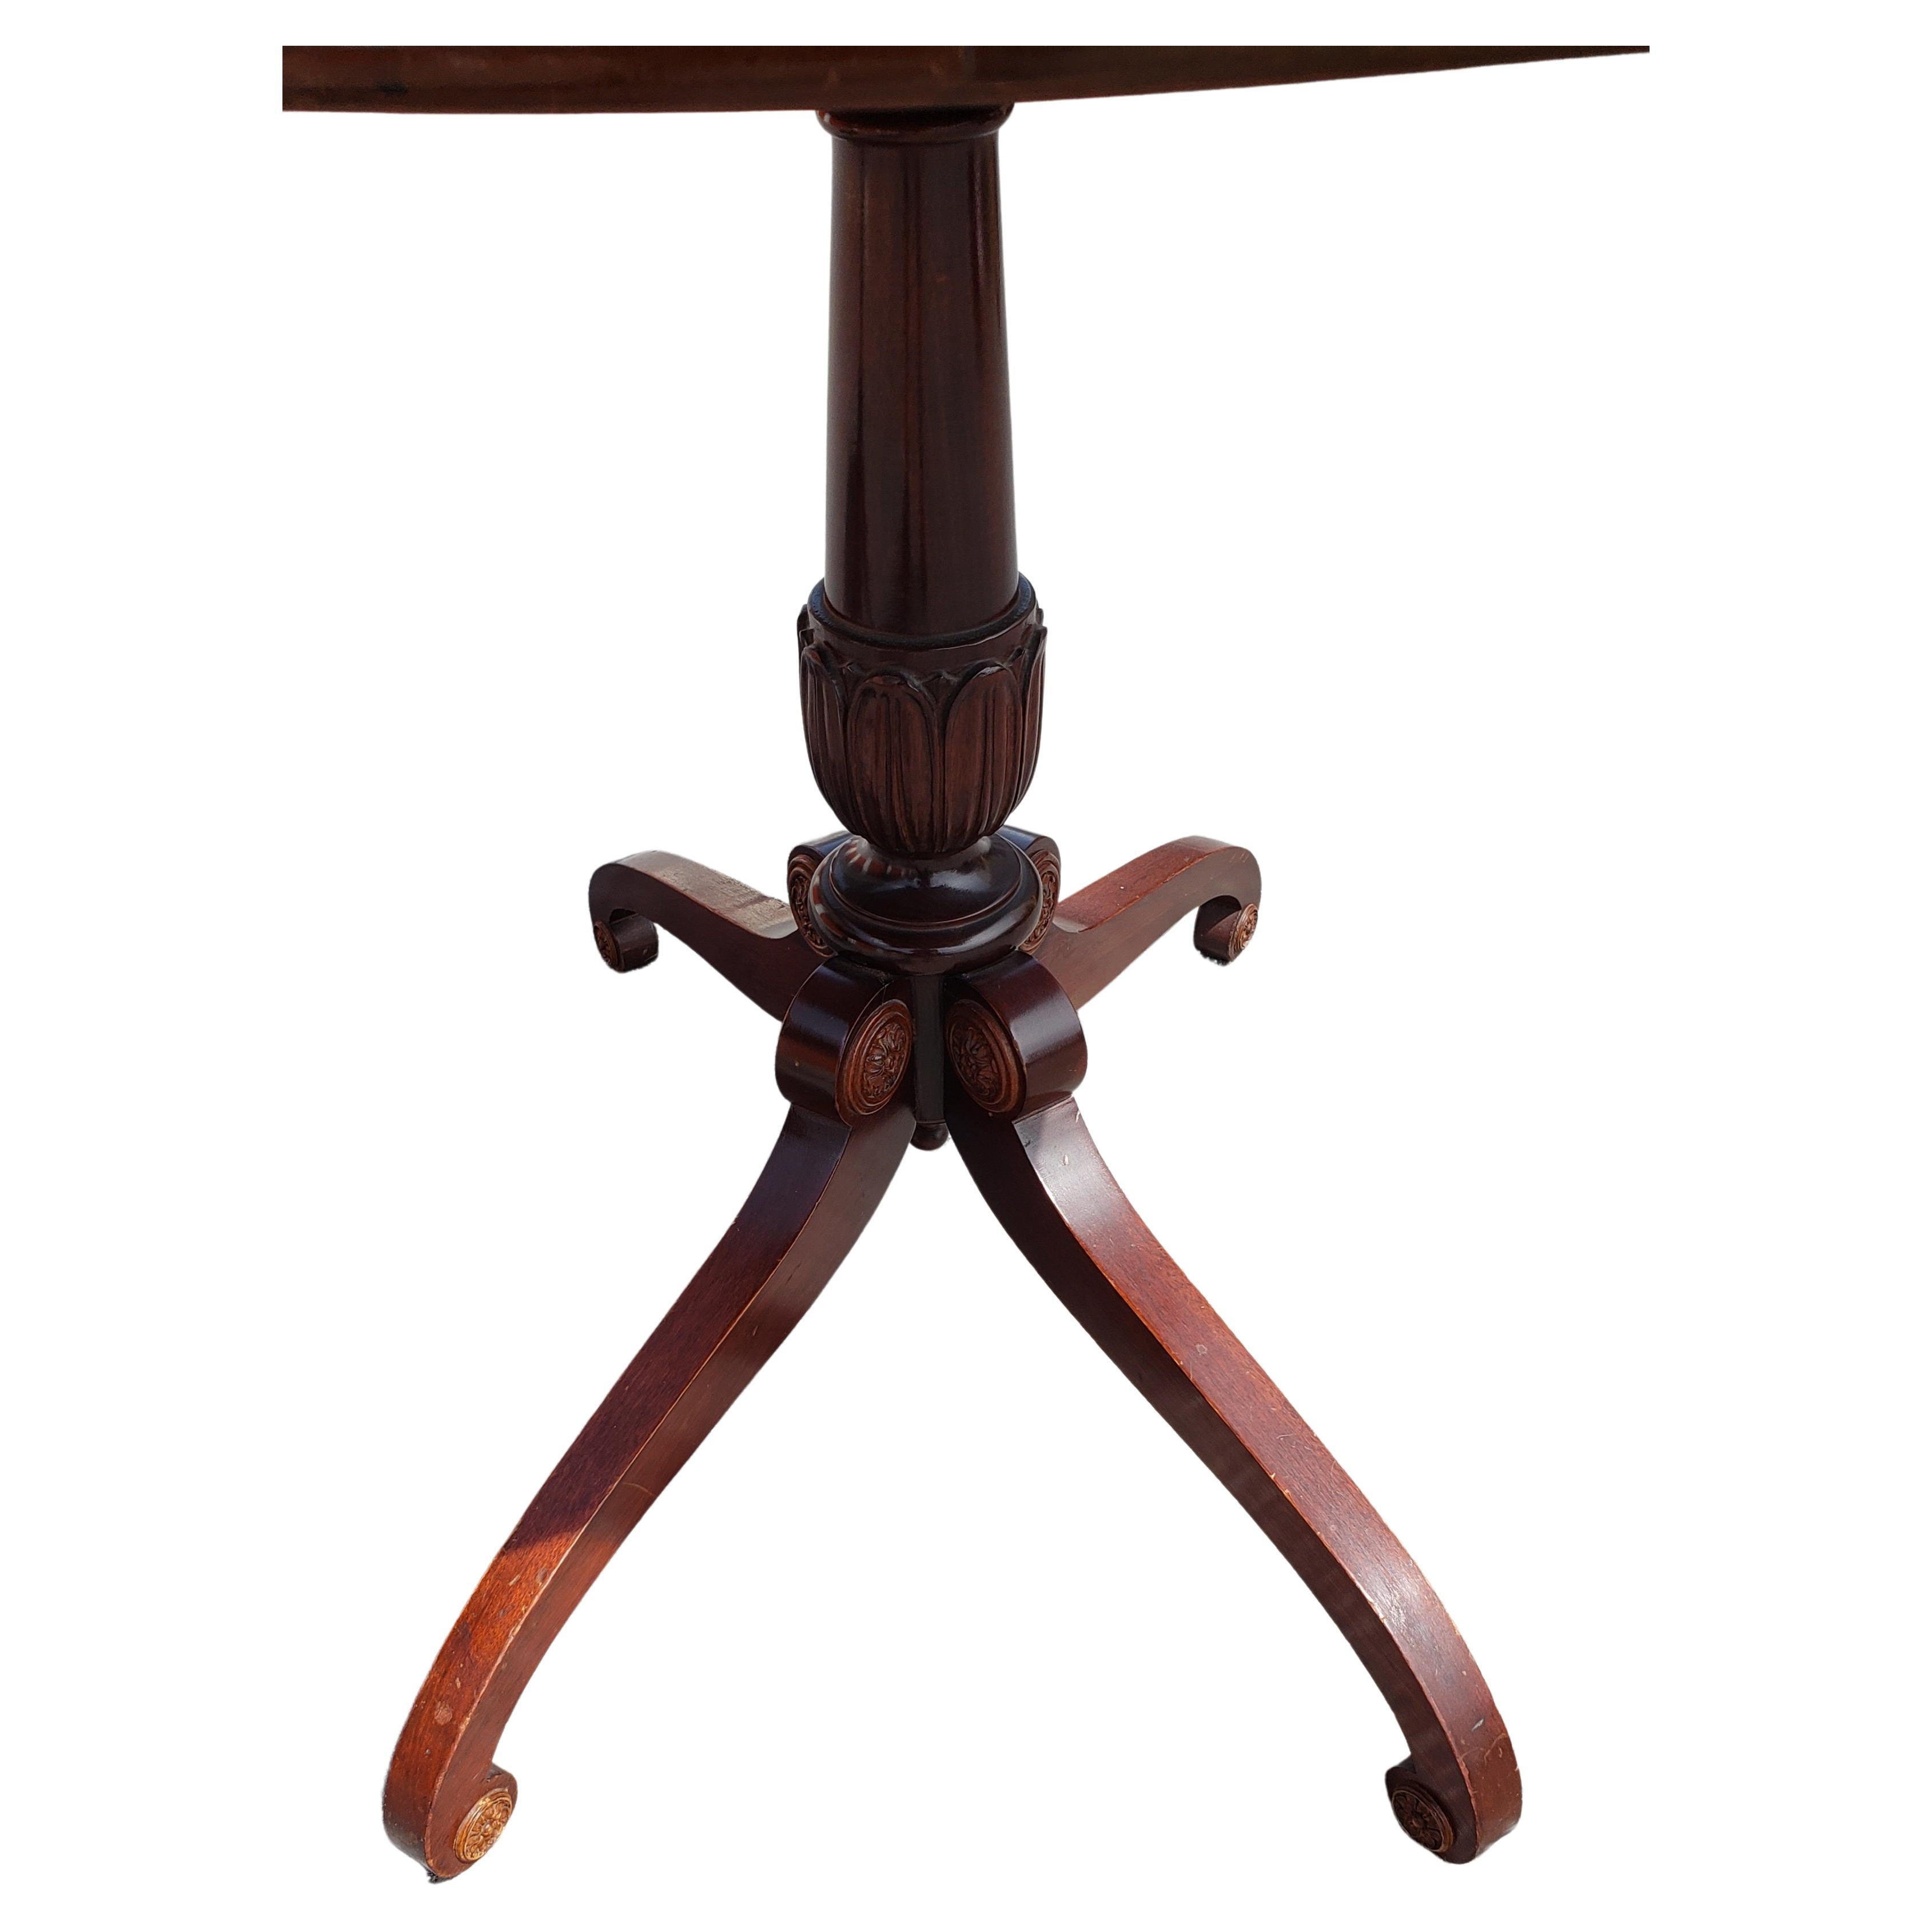 20th Century French Regency Mahogany Quad Feet Pedestal Leather Top Tray Table Tea Table